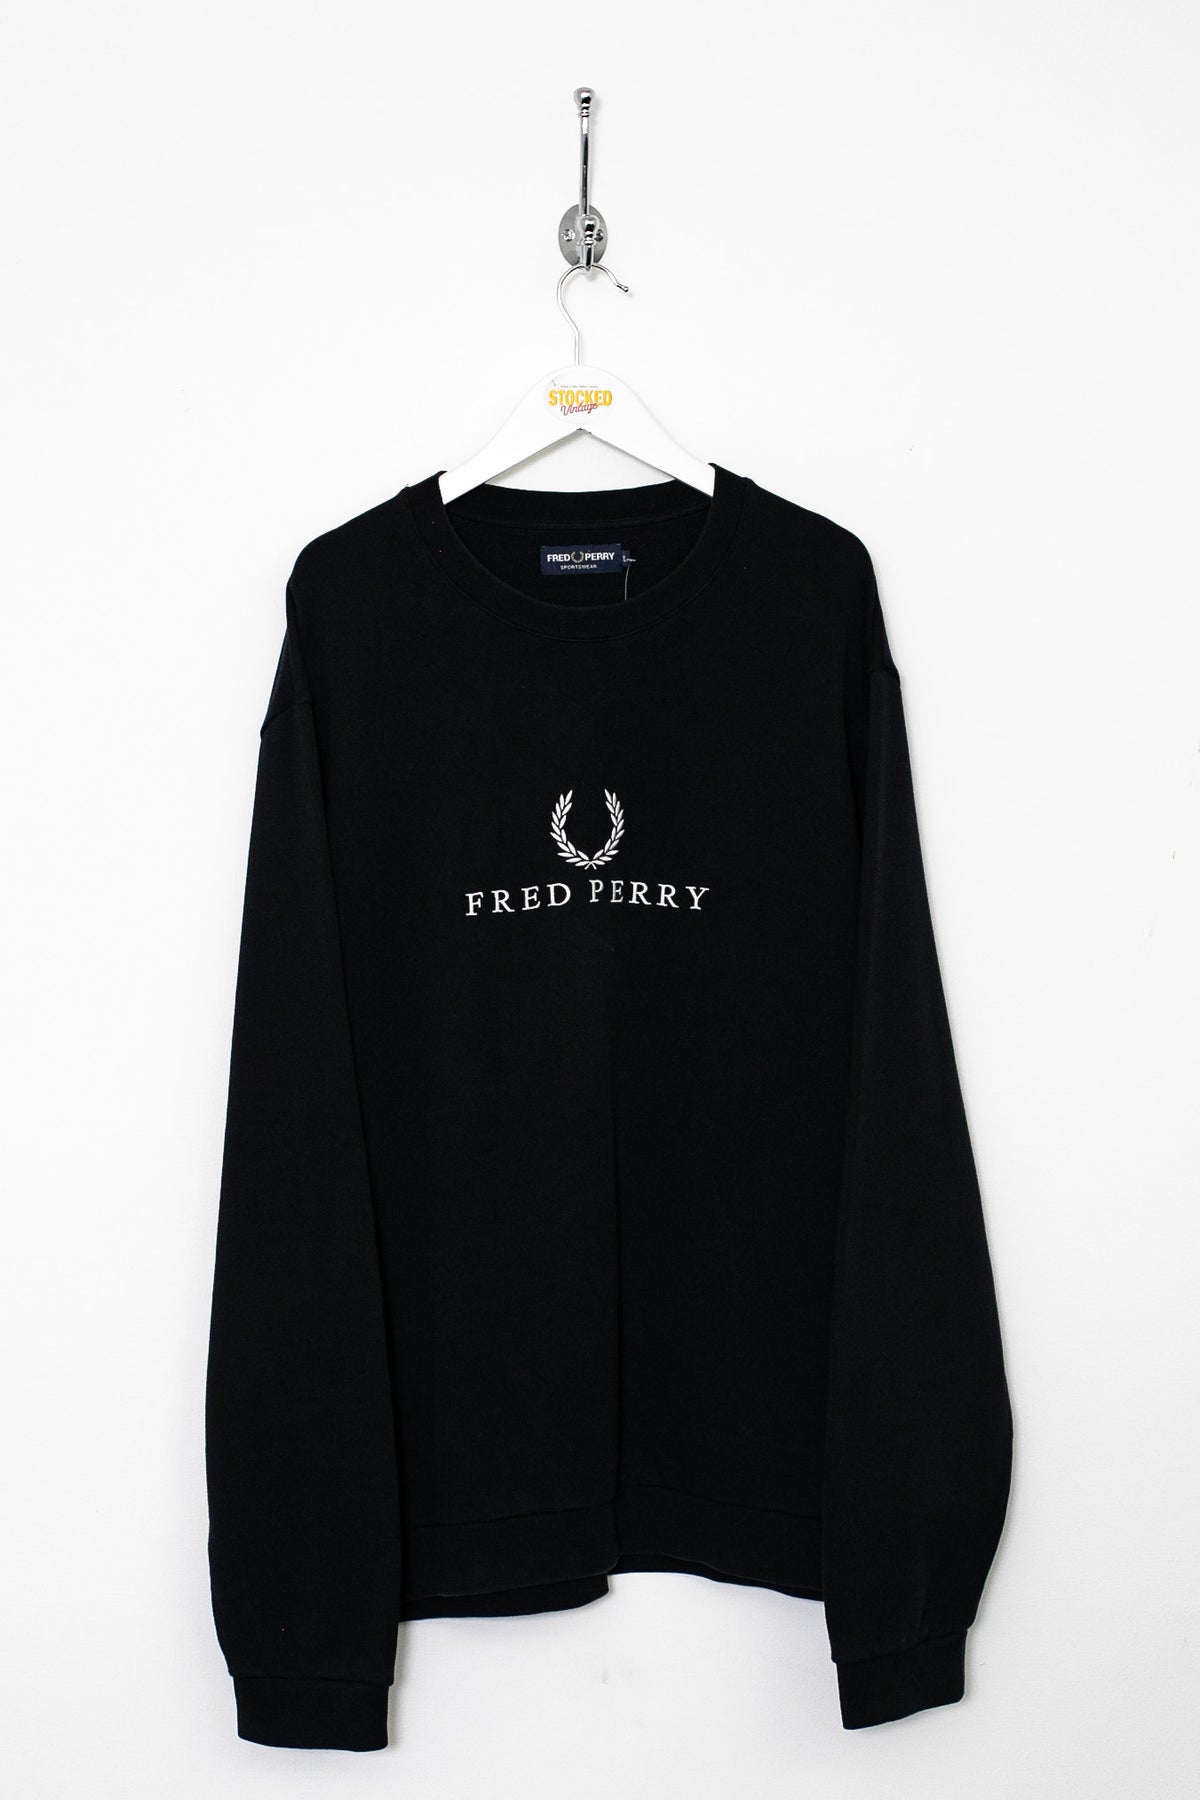 00s Fred Perry Sweatshirt (XL)